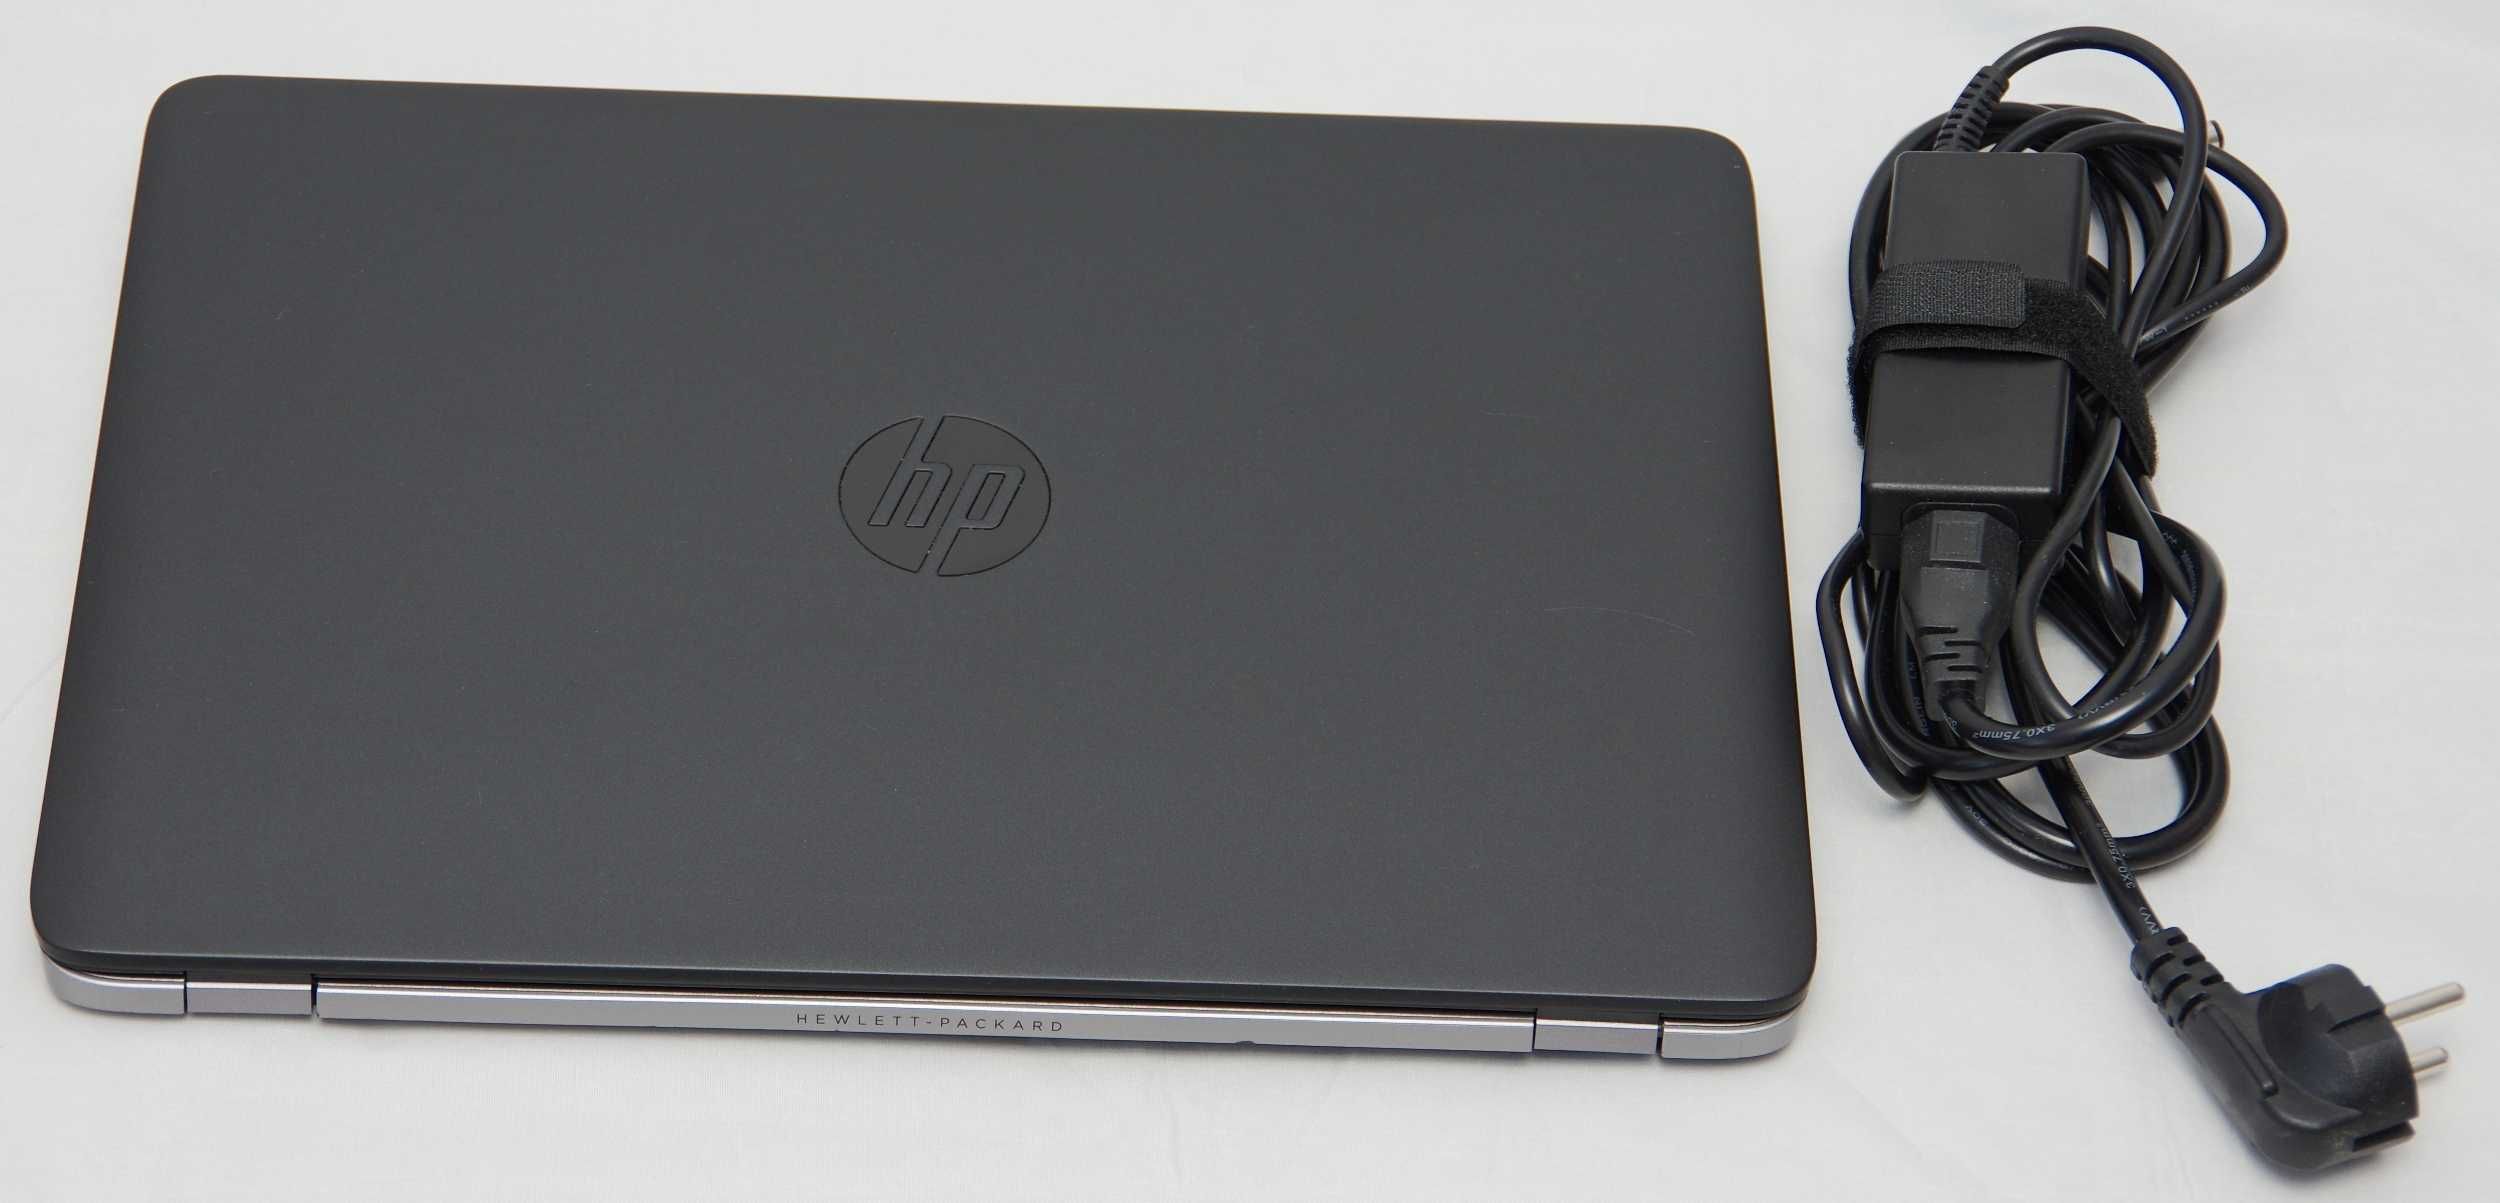 HP Elitebook 745 G2 AMD A8 PRO 7150B; 8GB; 1000GB